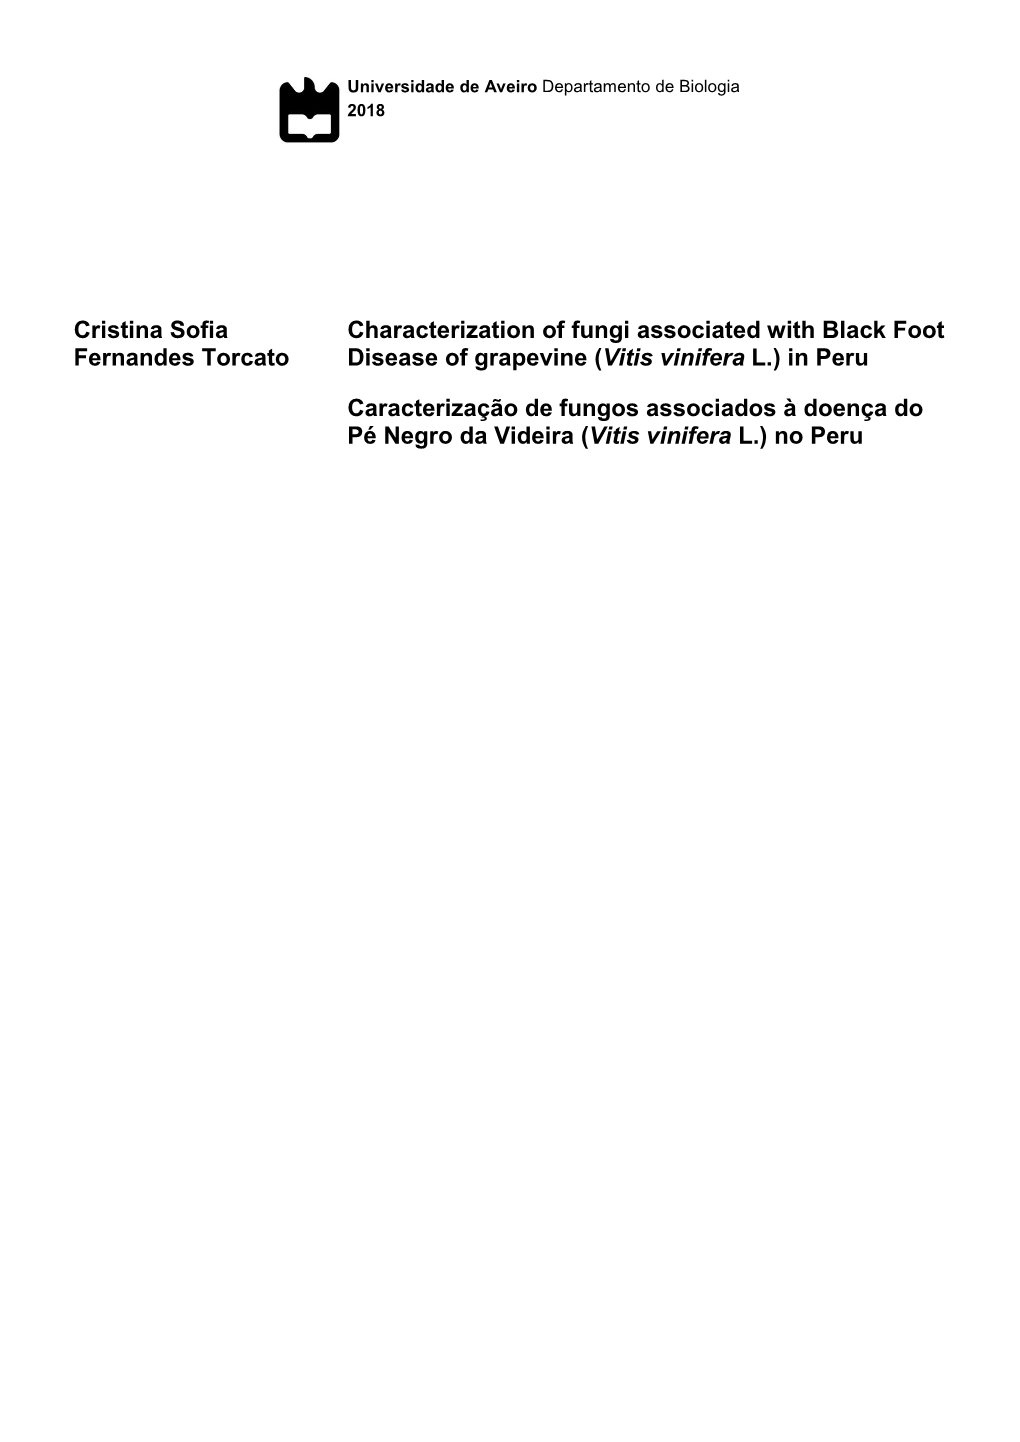 Cristina Sofia Fernandes Torcato Characterization of Fungi Associated